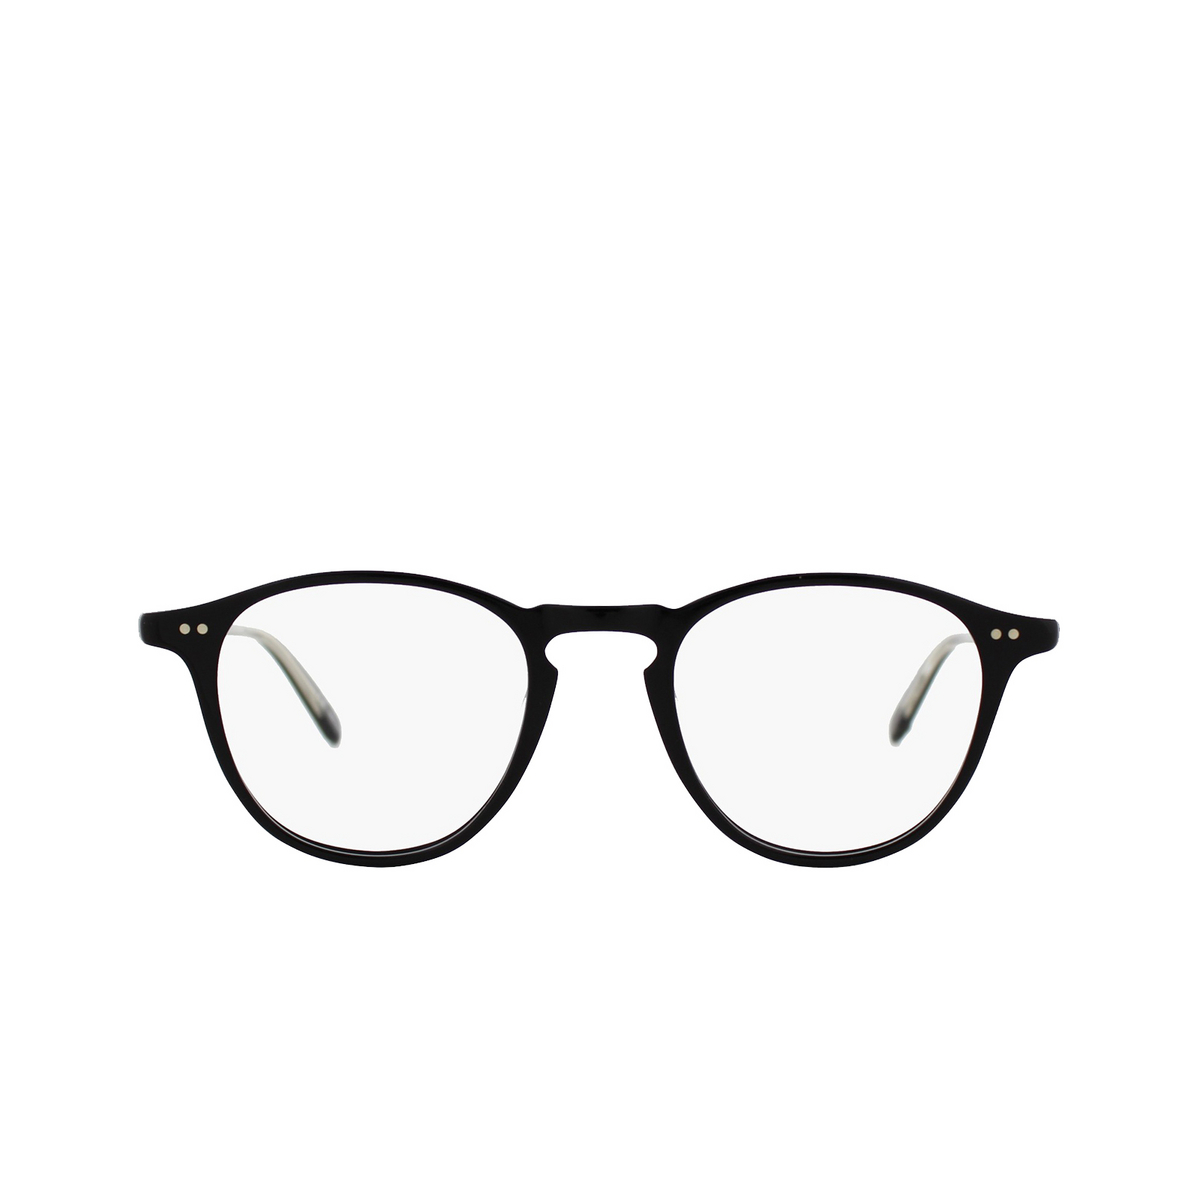 Garrett Leight HAMPTON Eyeglasses BK Black - front view